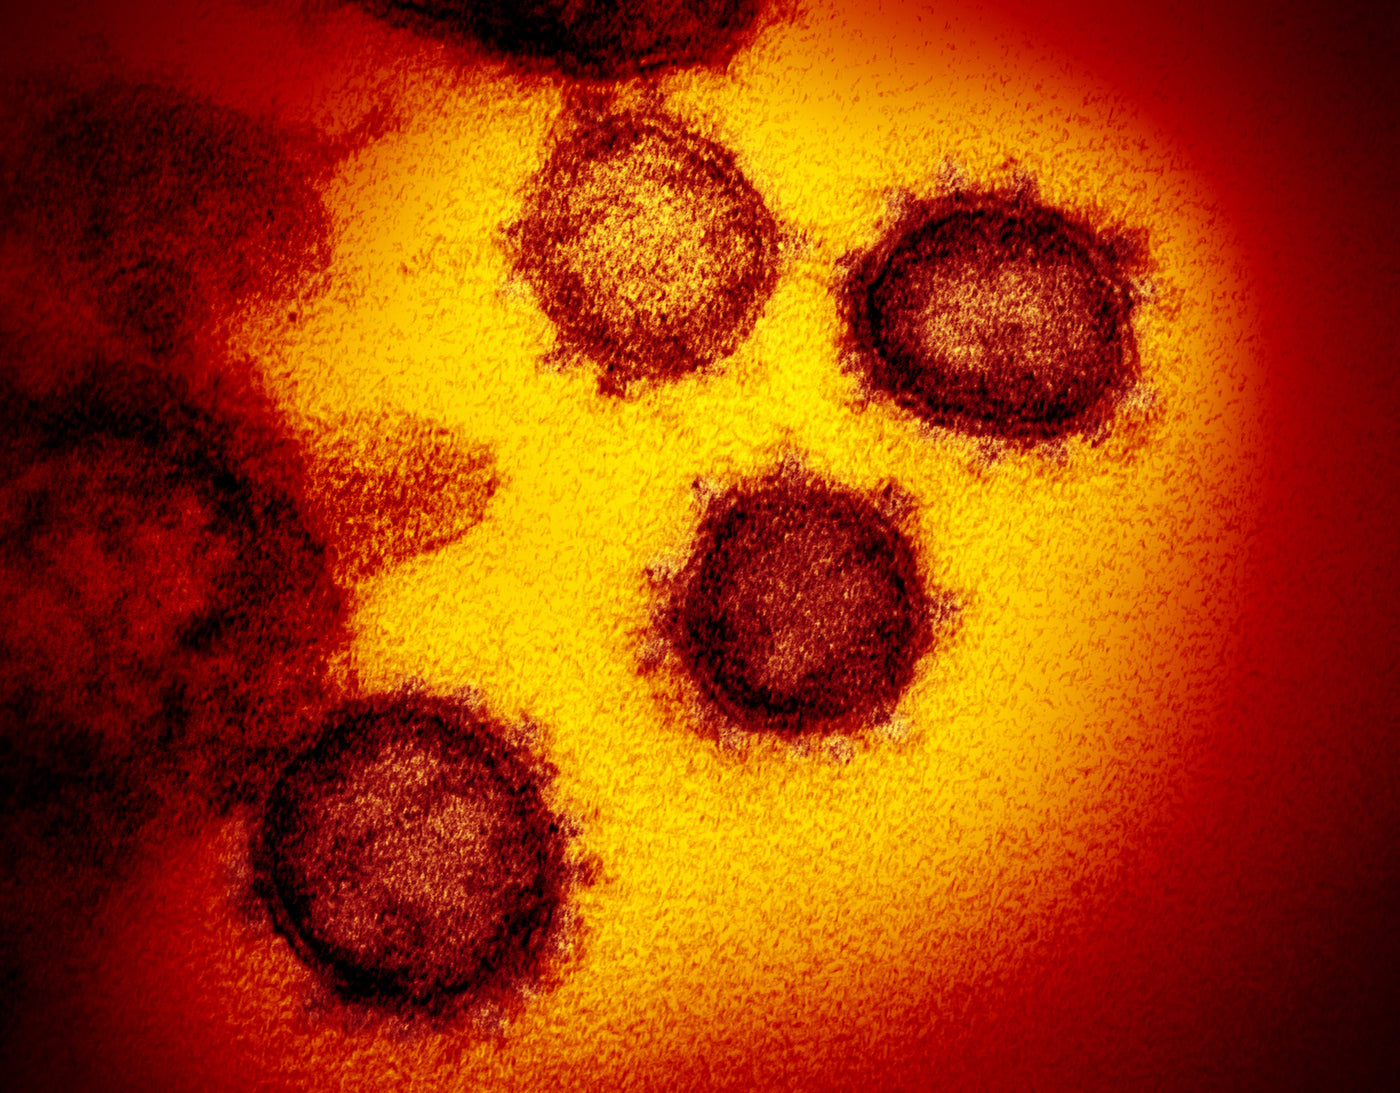 covid 19 virus image at cellular level 